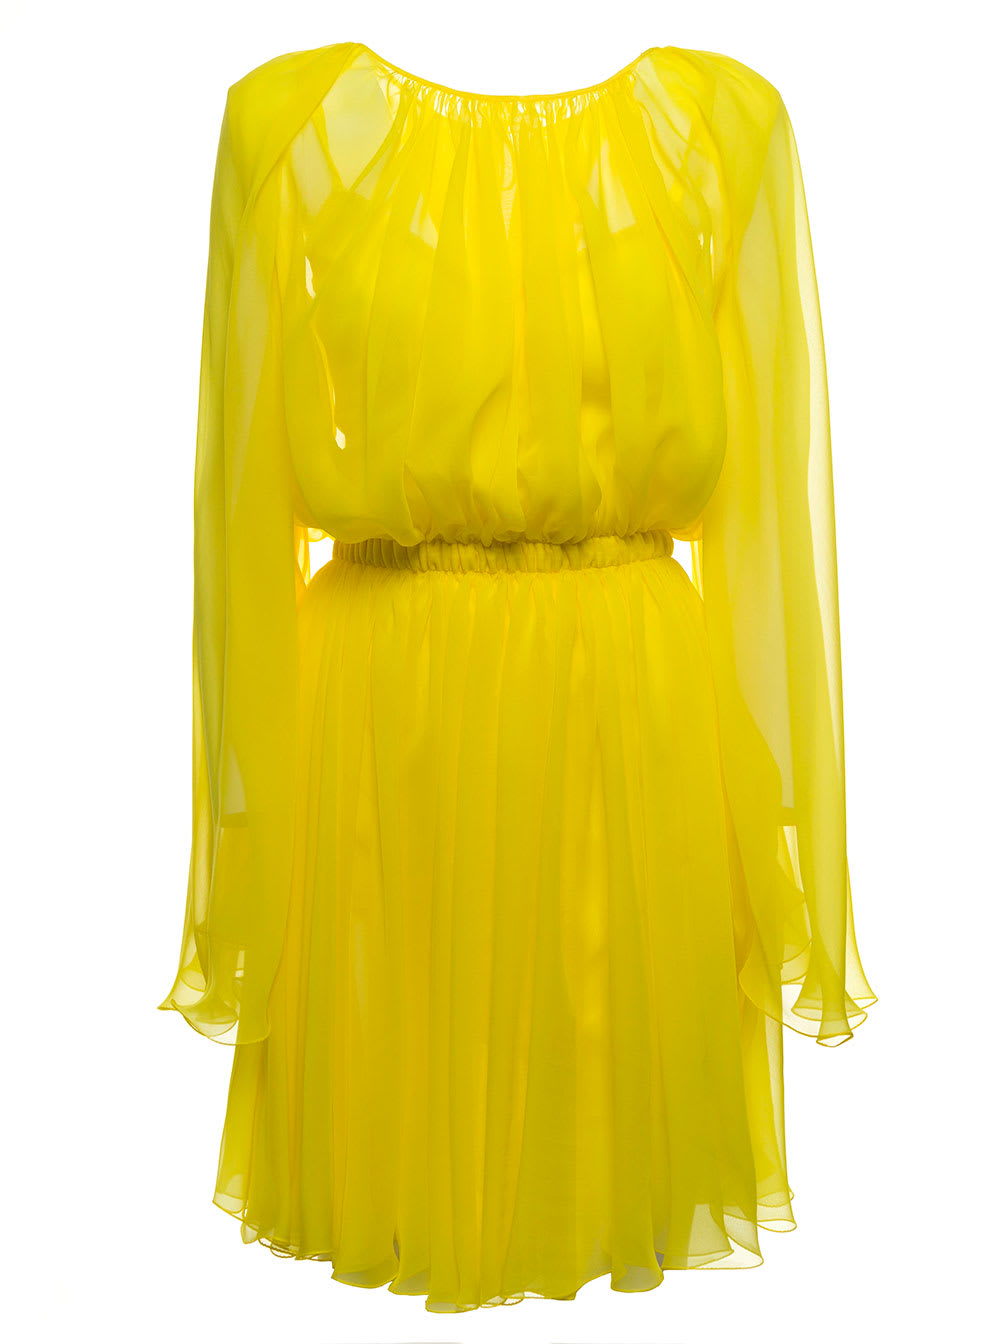 dolce & gabbana yellow silk chiffon dress